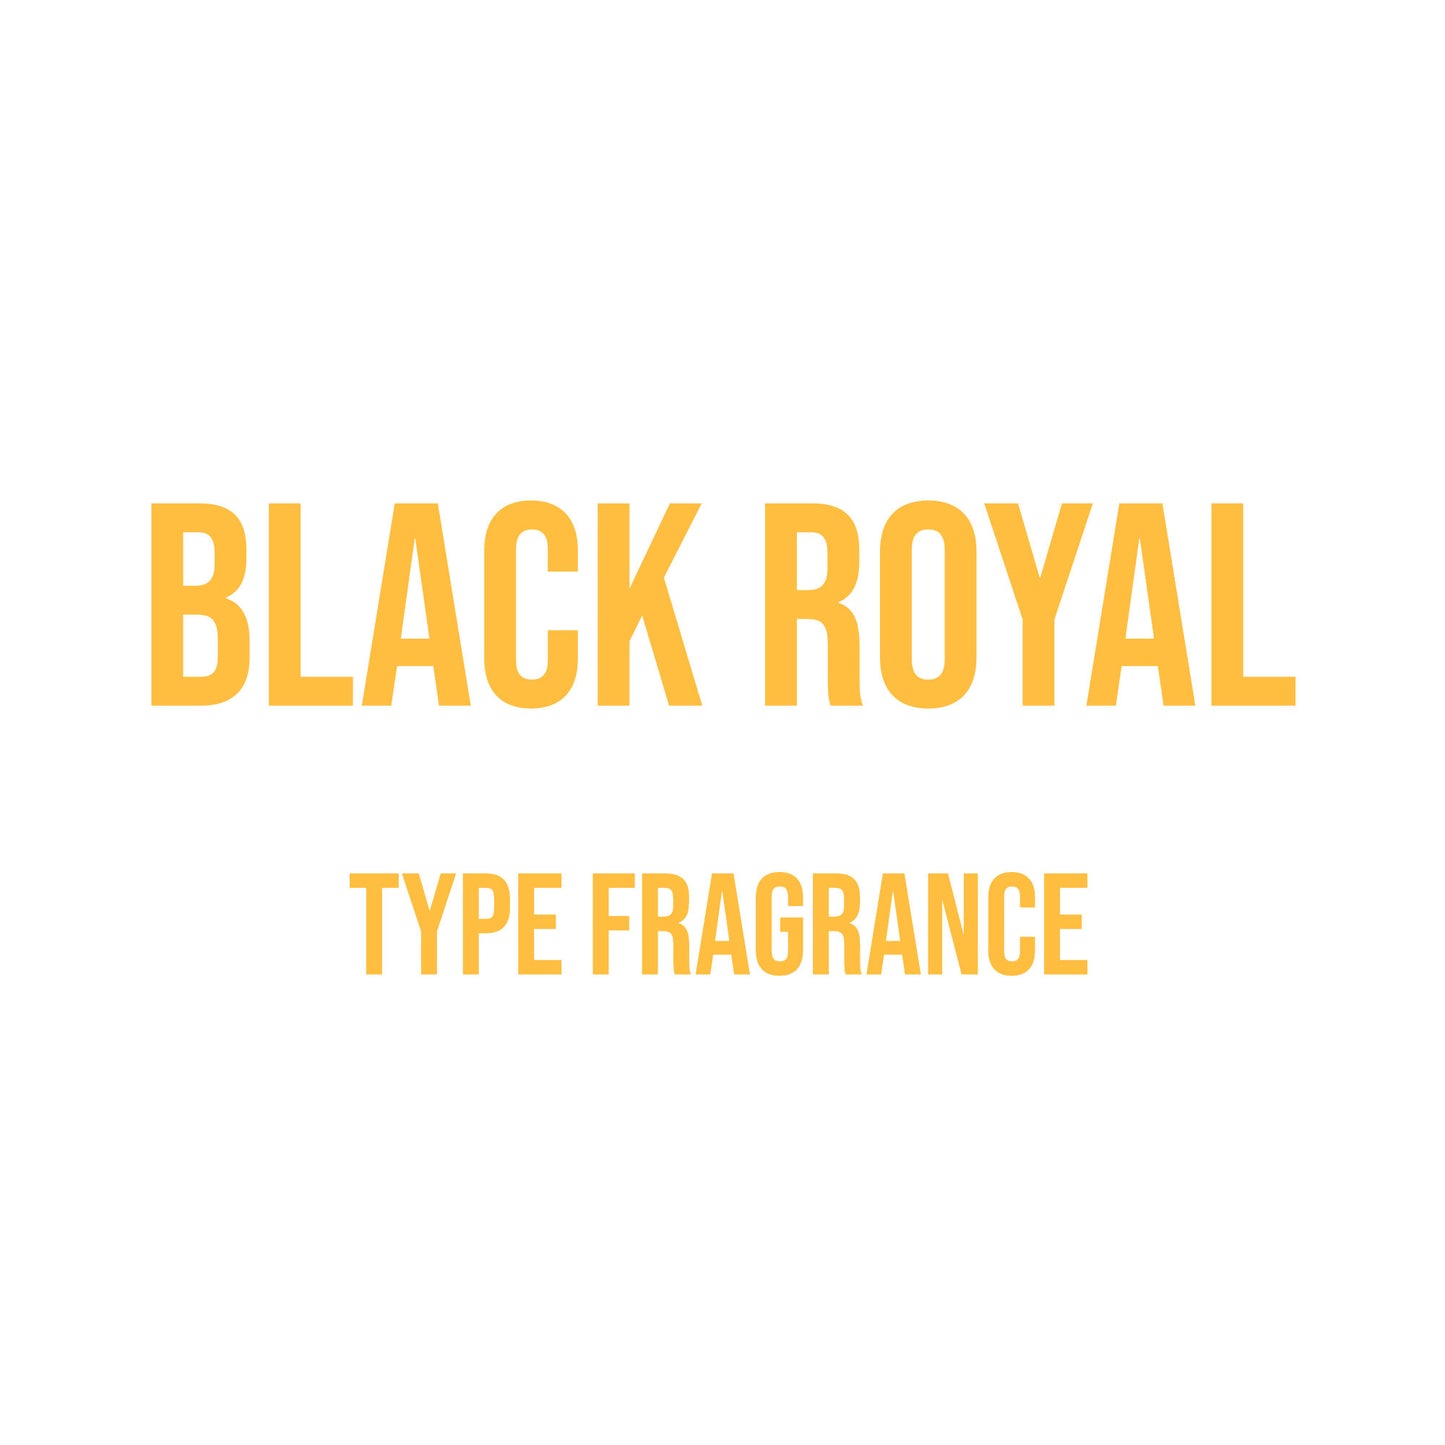 Black Royal Type Fragrance